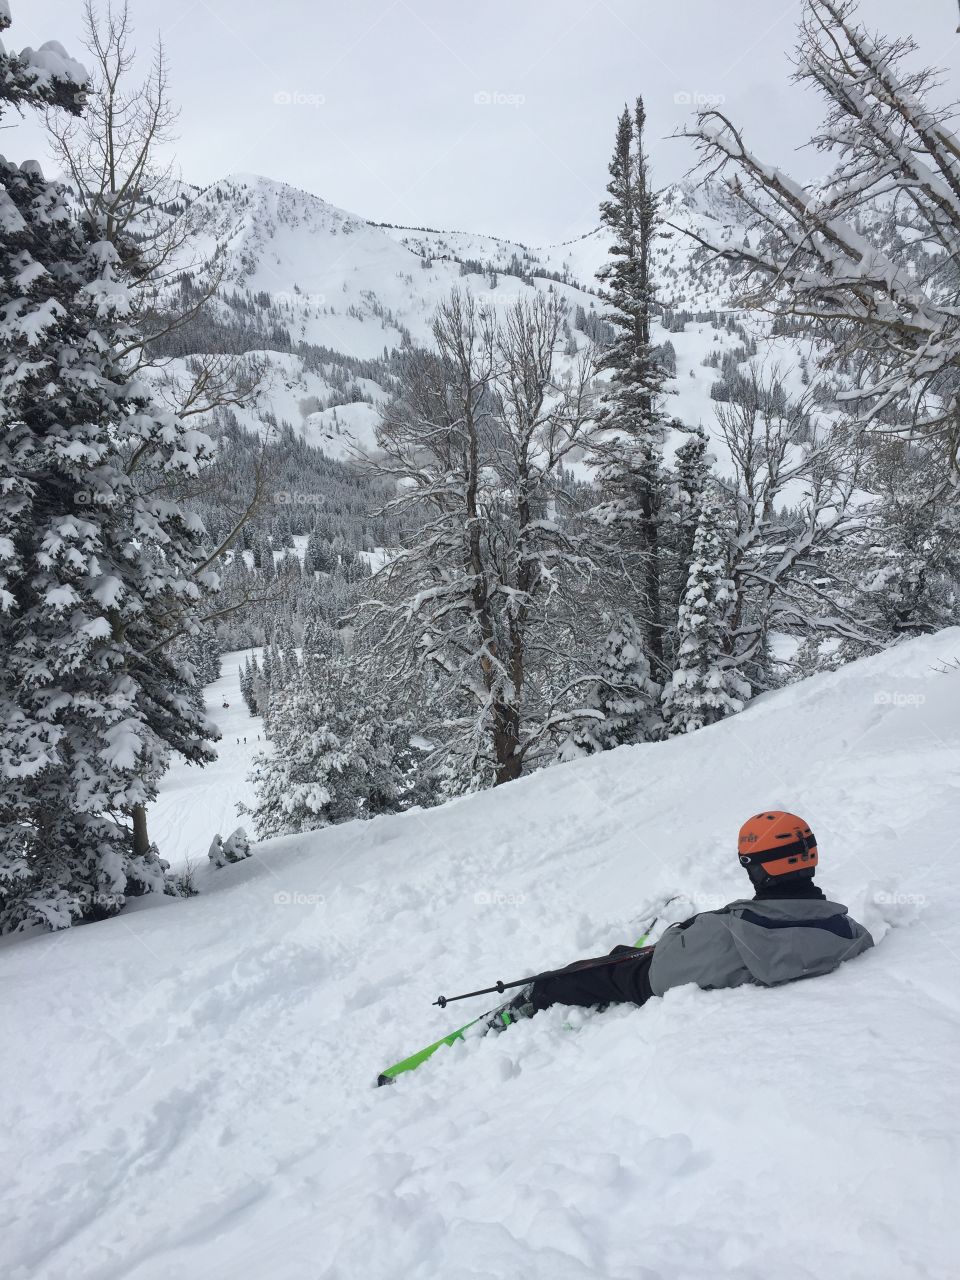 Taking a break on the powdery ski slope